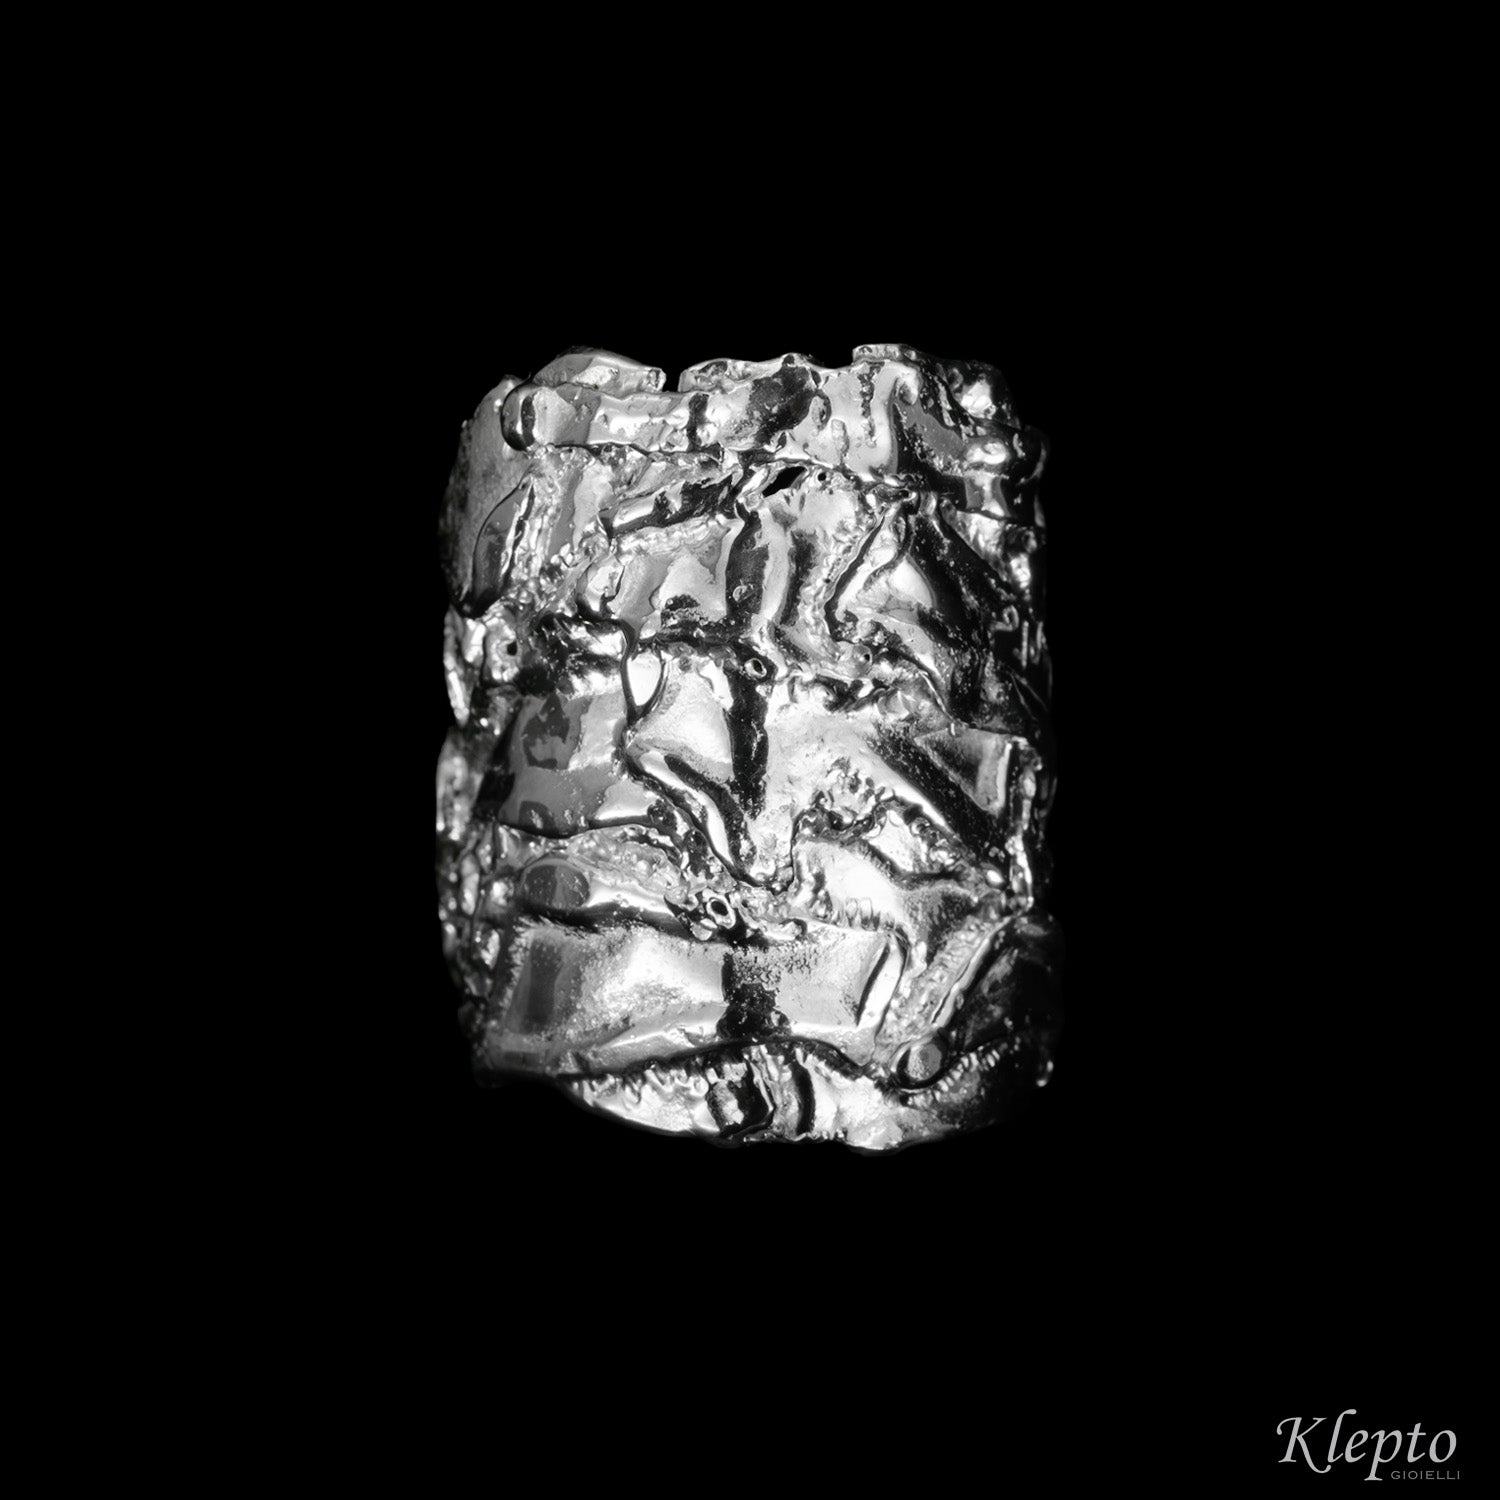 Silnova® flame-fused phalanx silver ring